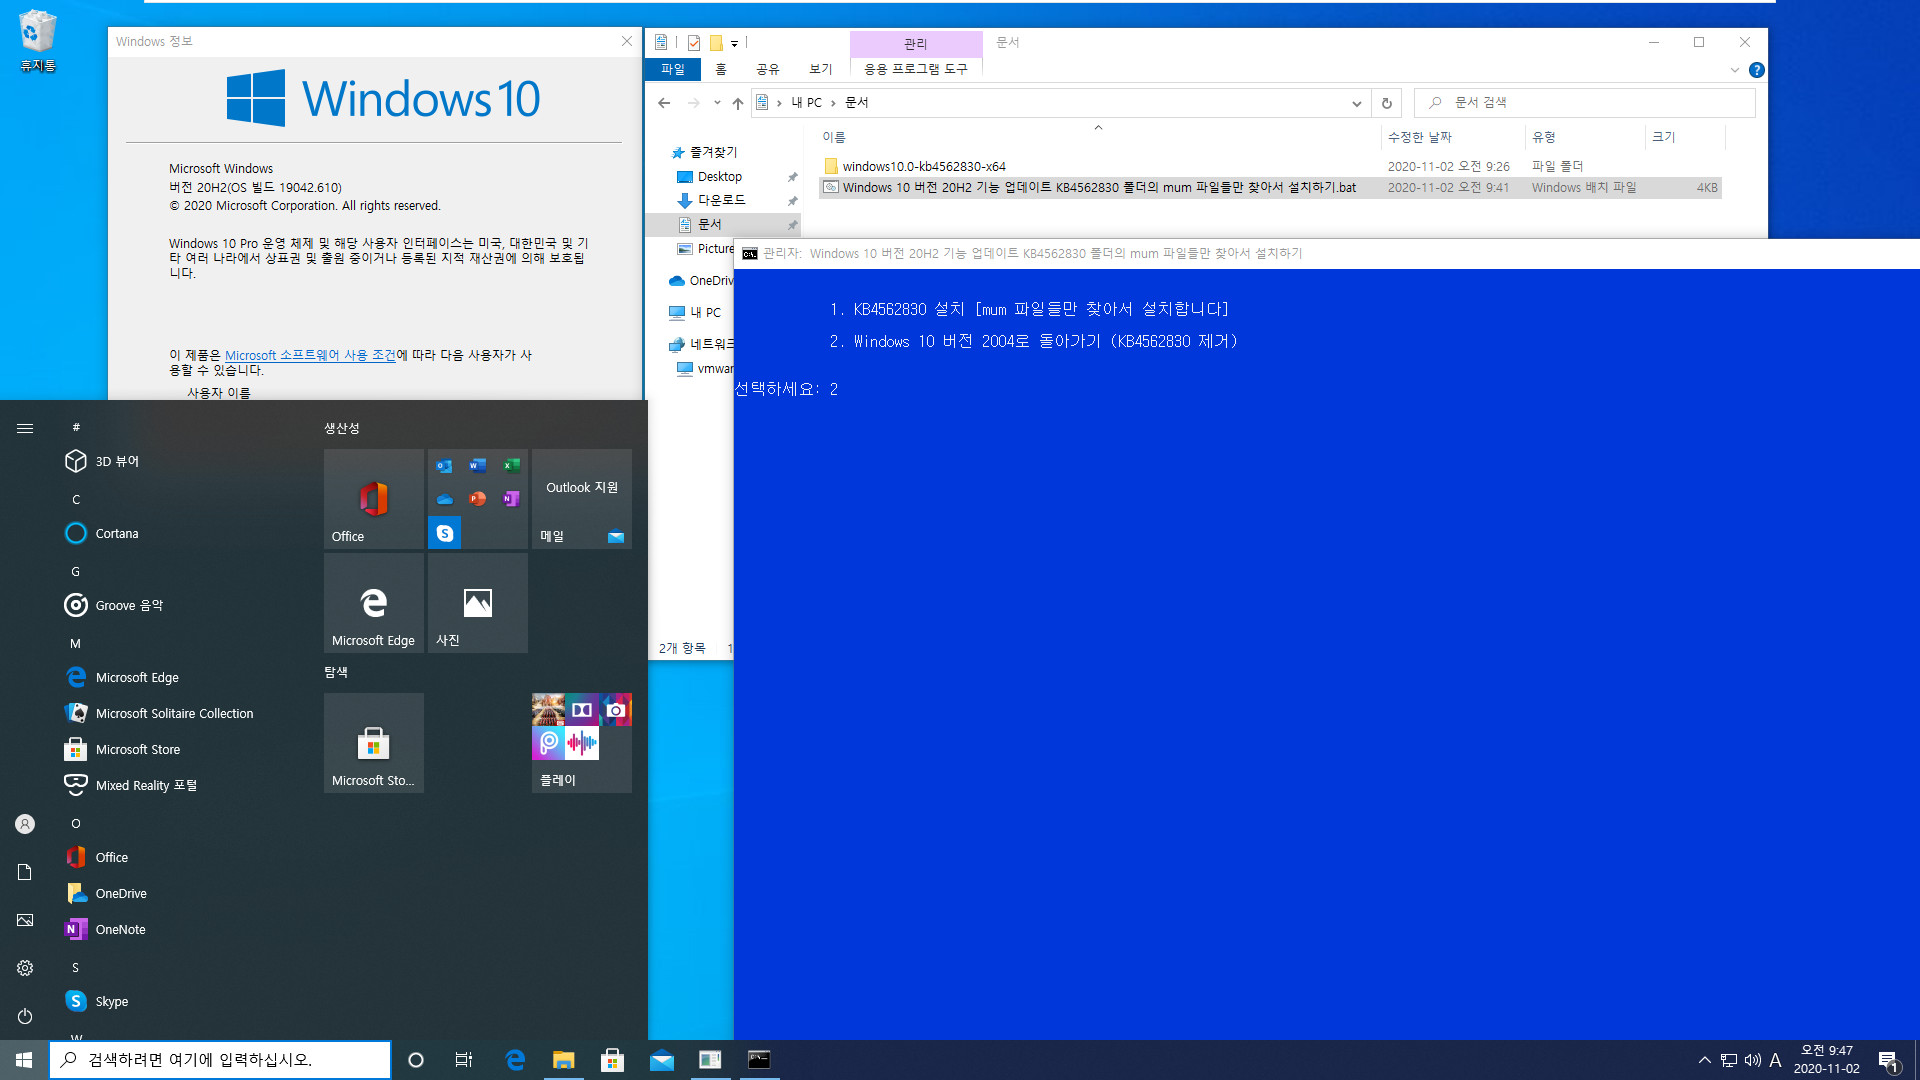 Windows 10 버전 20H2 기능 업데이트 KB4562830 폴더의 mum 파일들만 찾아서 설치하기.bat - 크로미엄 엣지 설치하지 않고 버전 20H2만 설치하기 테스트 2020-11-02_094726.jpg